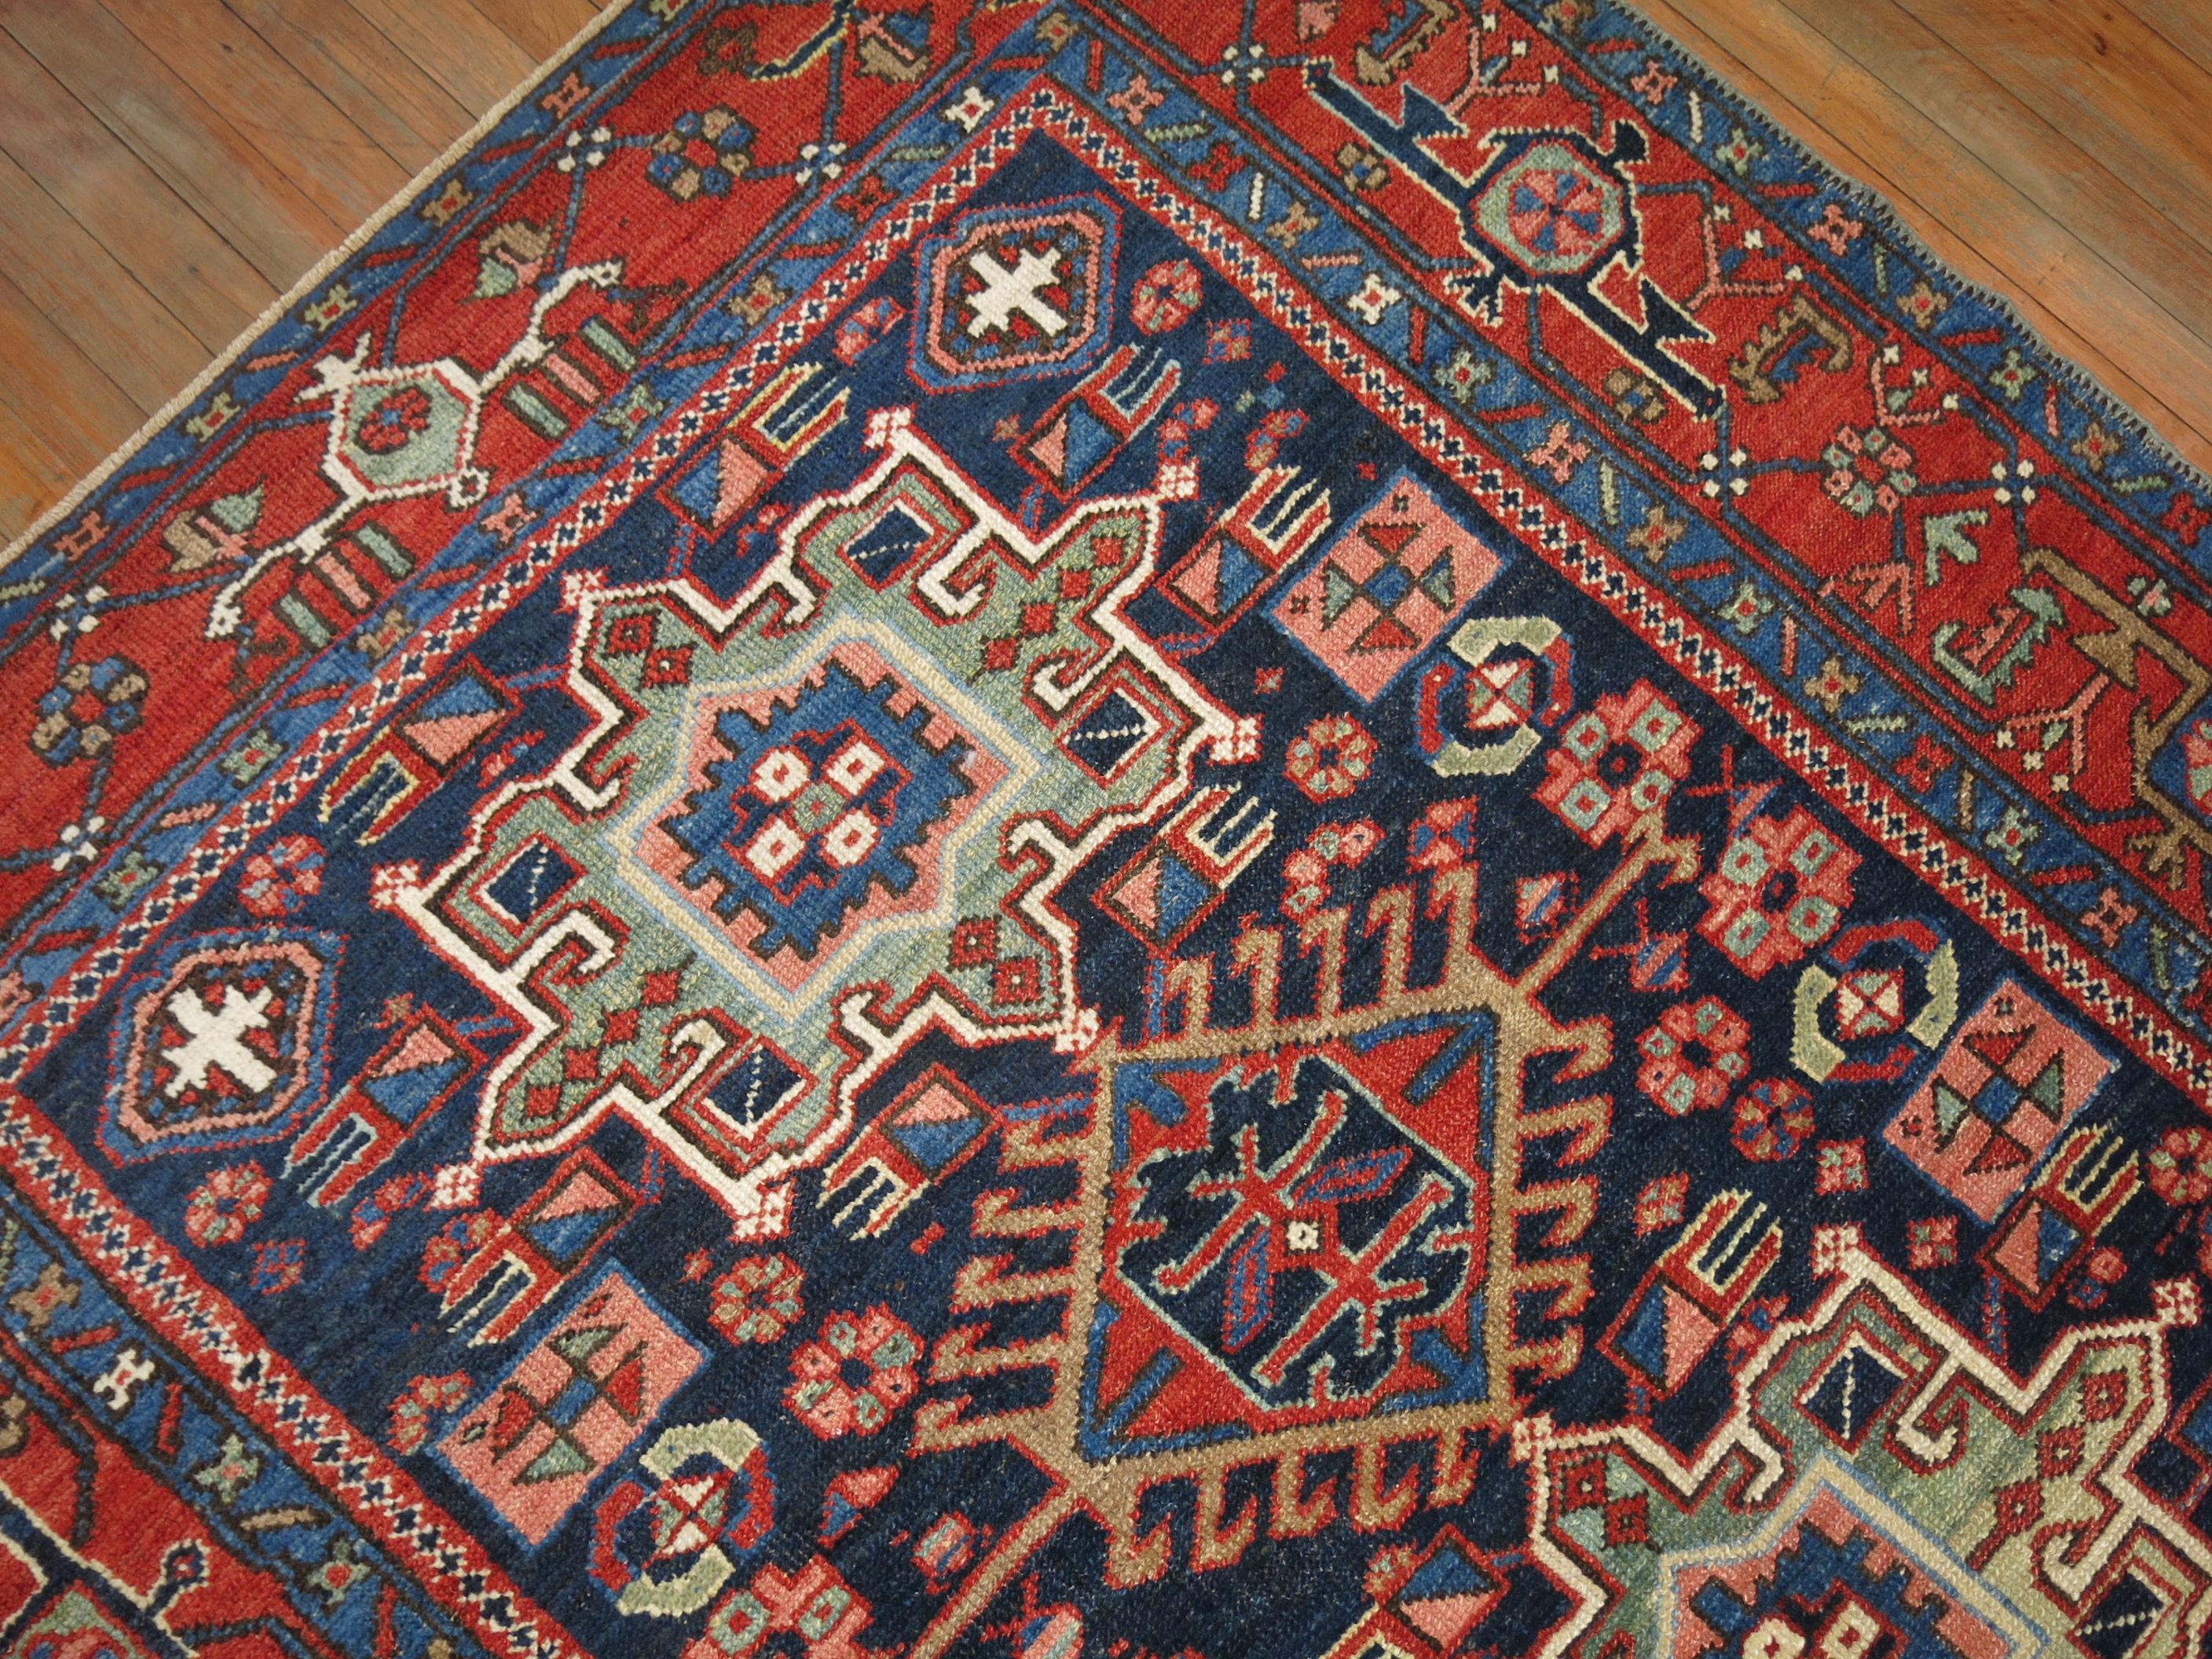 Rare size colorful antique Persian Heriz Karadja rug.